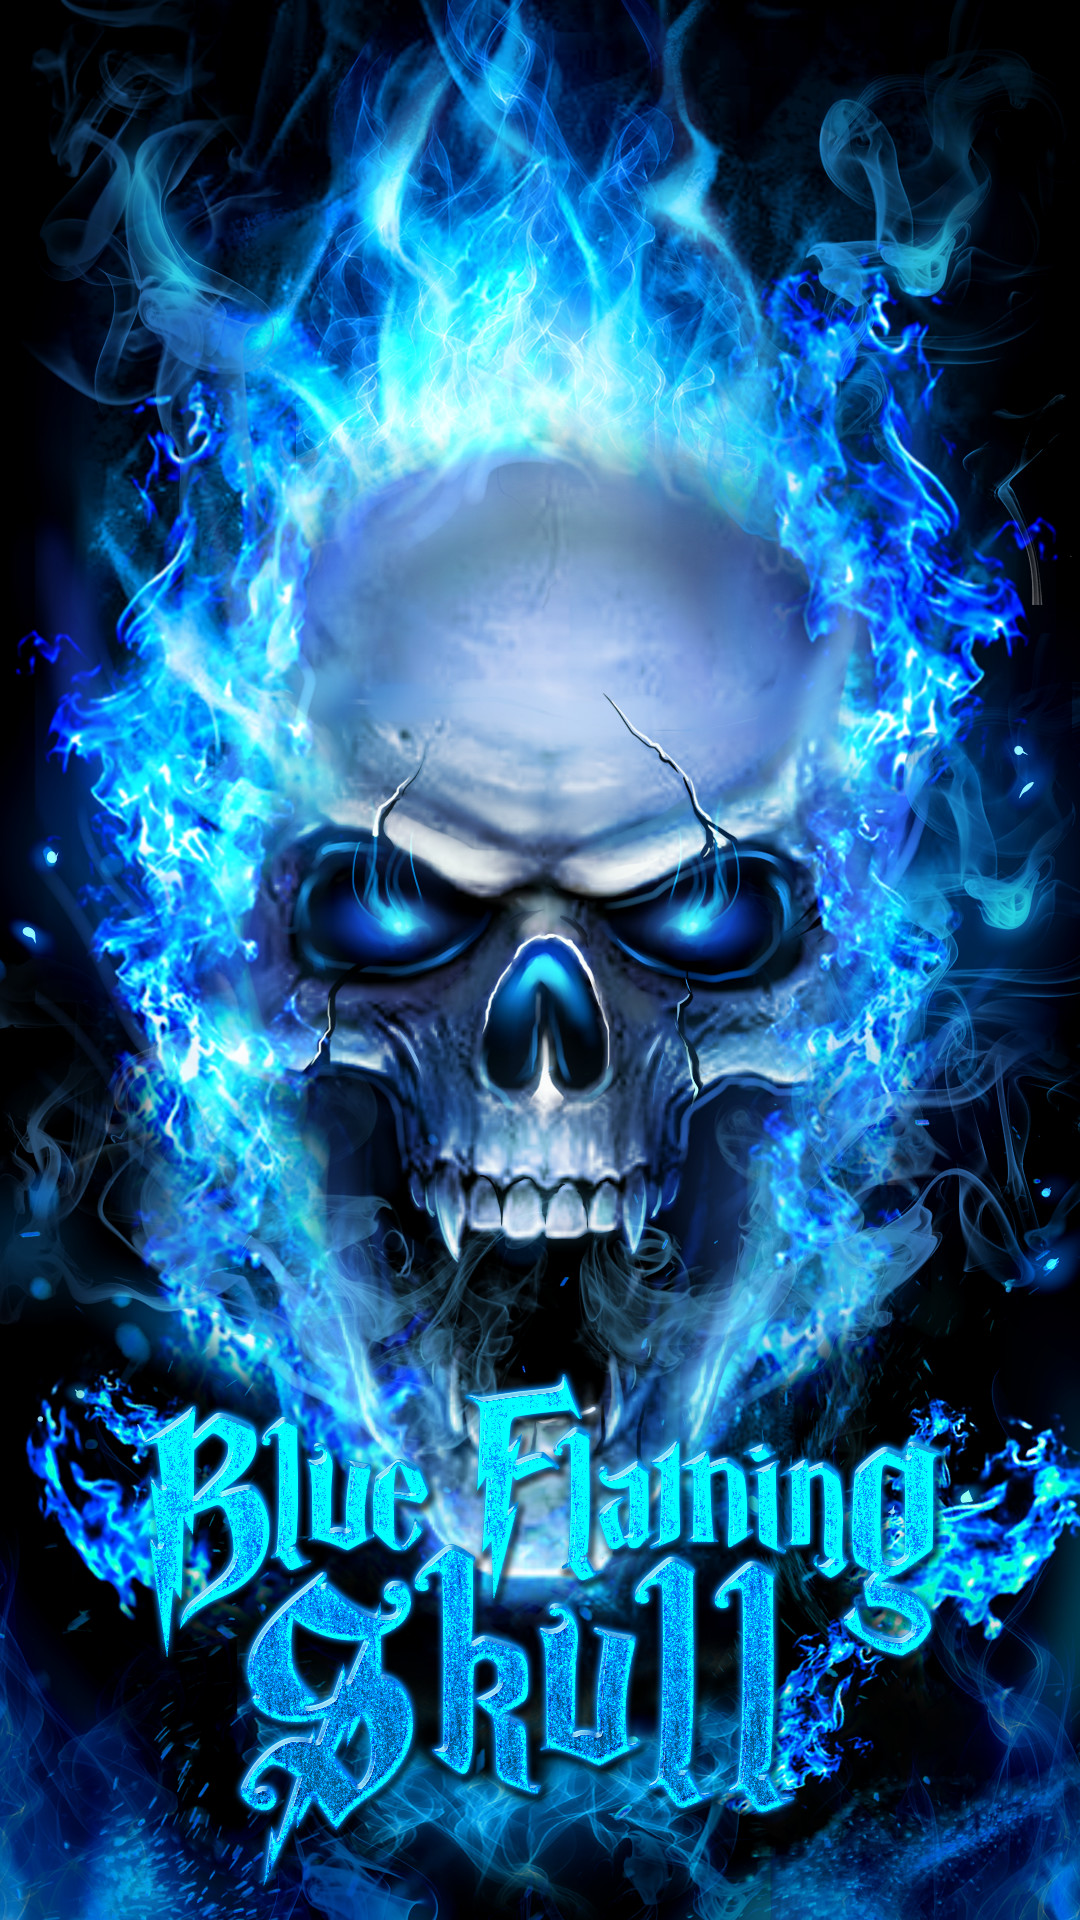 1080x1920 Blue flaming skull live wallpaper!